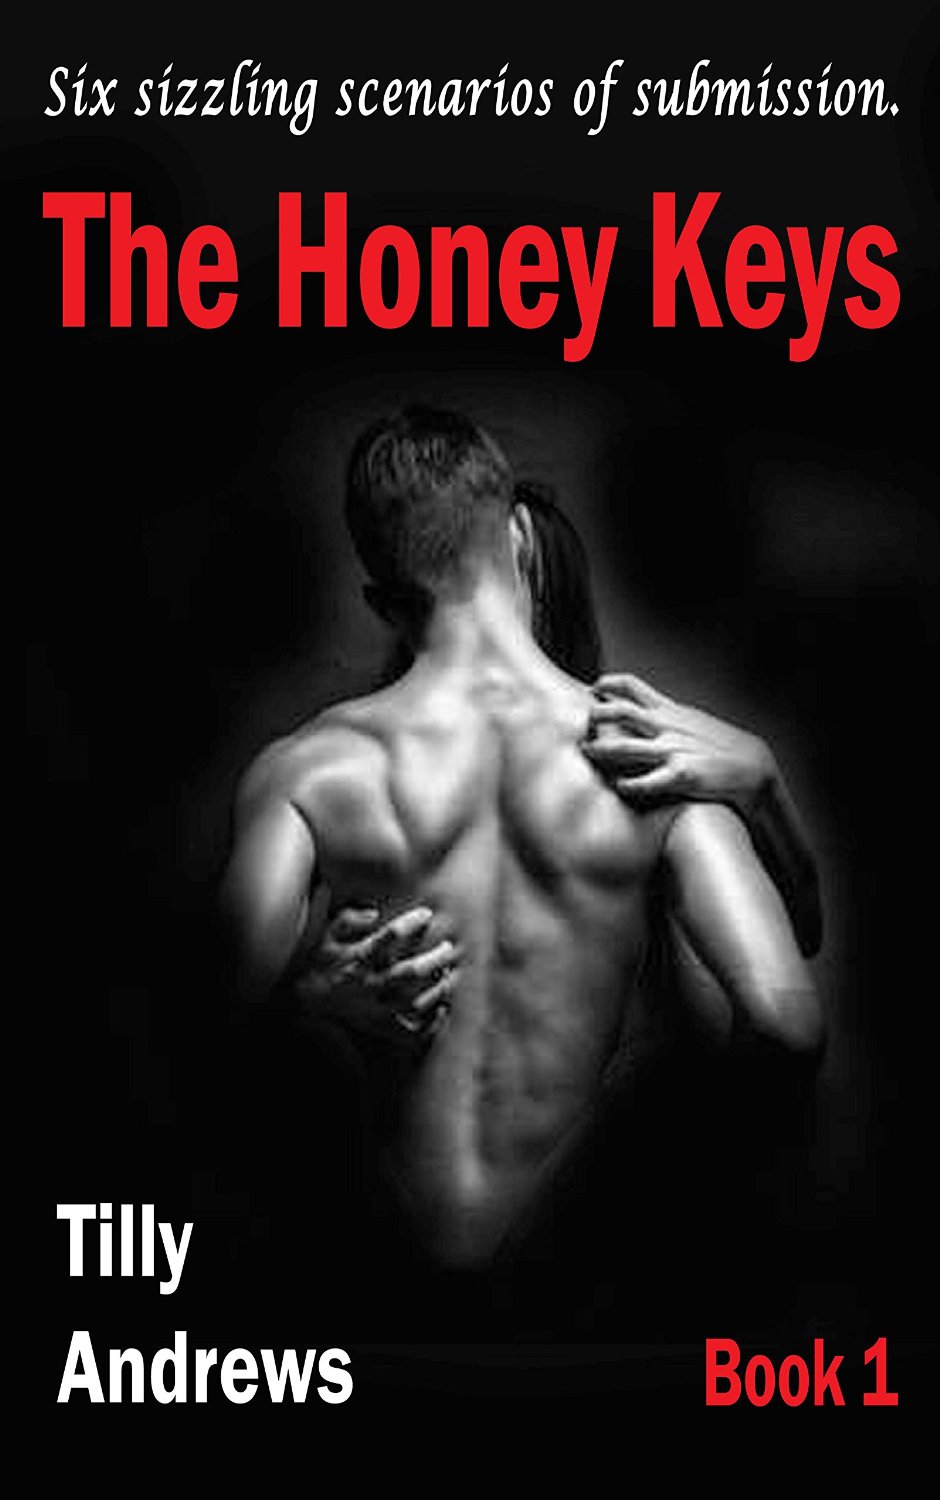 The Honey Keys – Book 1 by Tilly Andrews